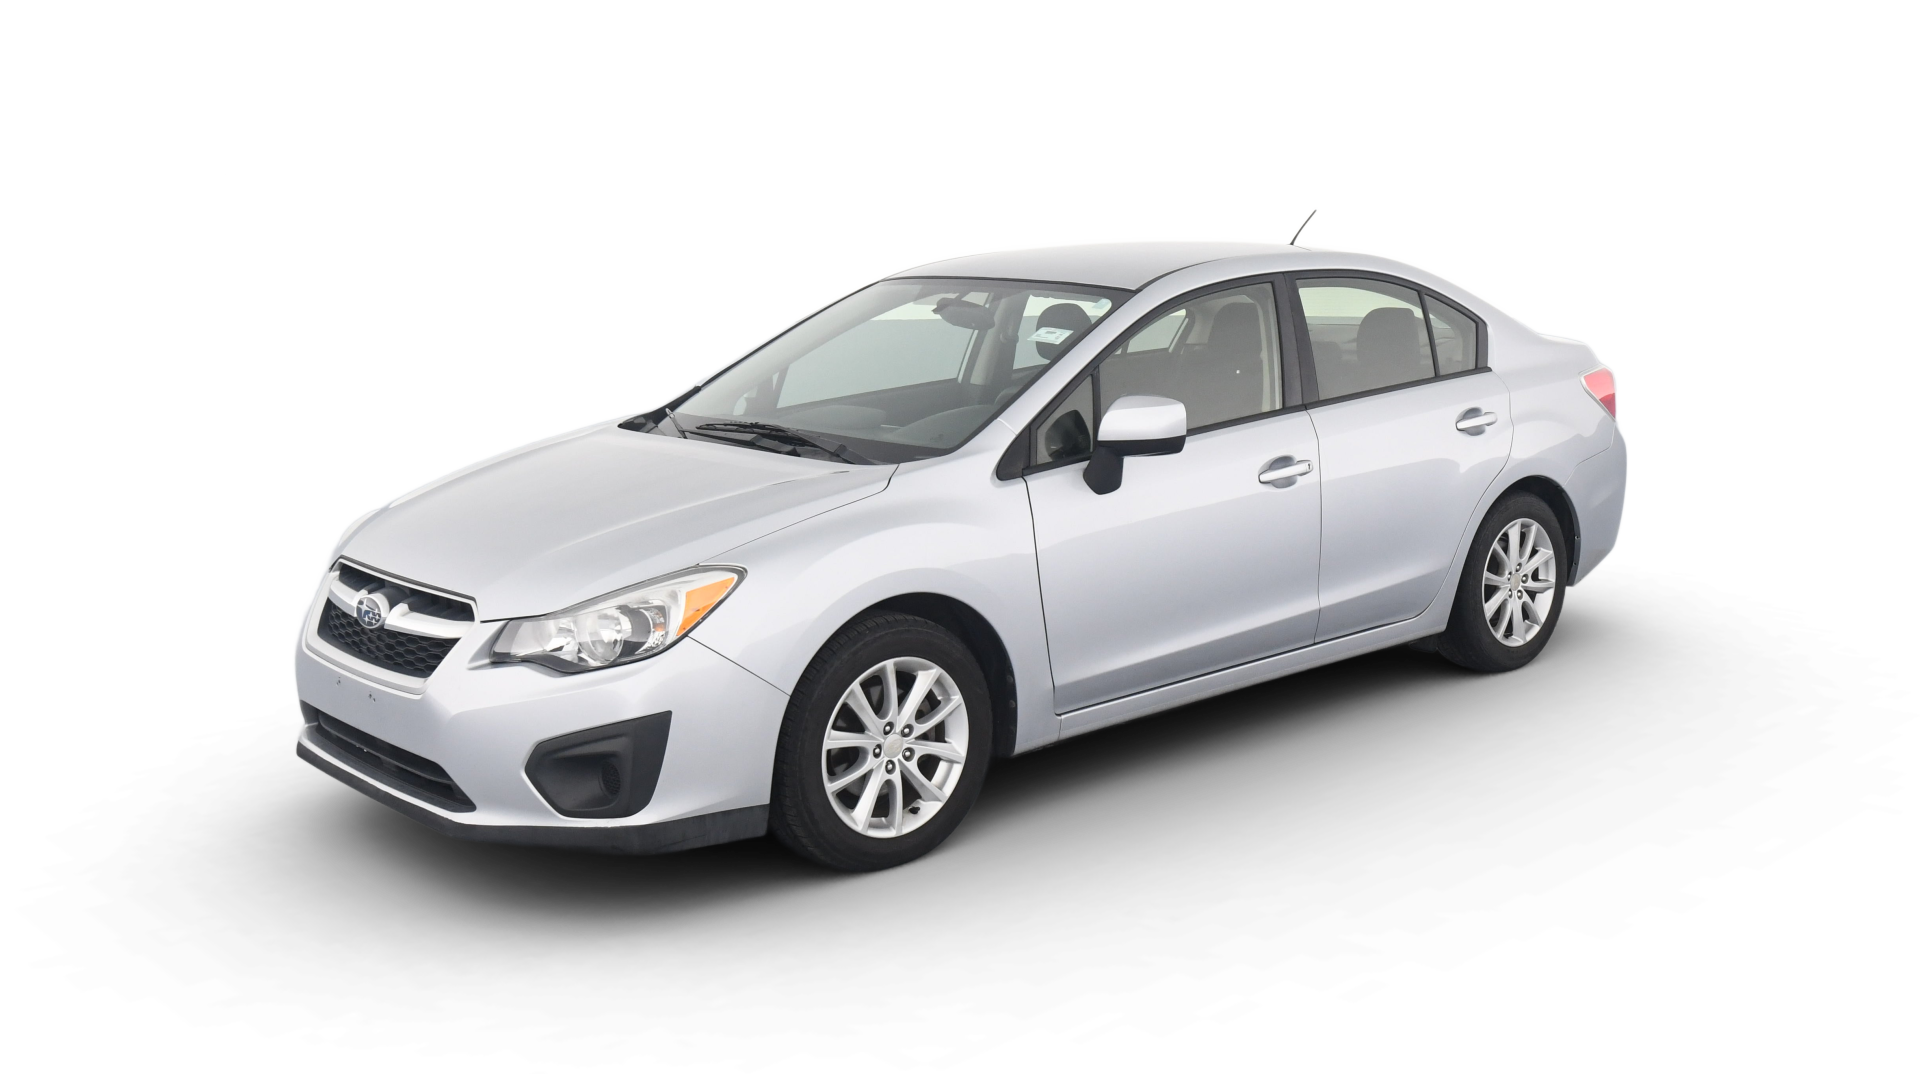 Used 2013 Subaru Impreza For Sale Online | Carvana